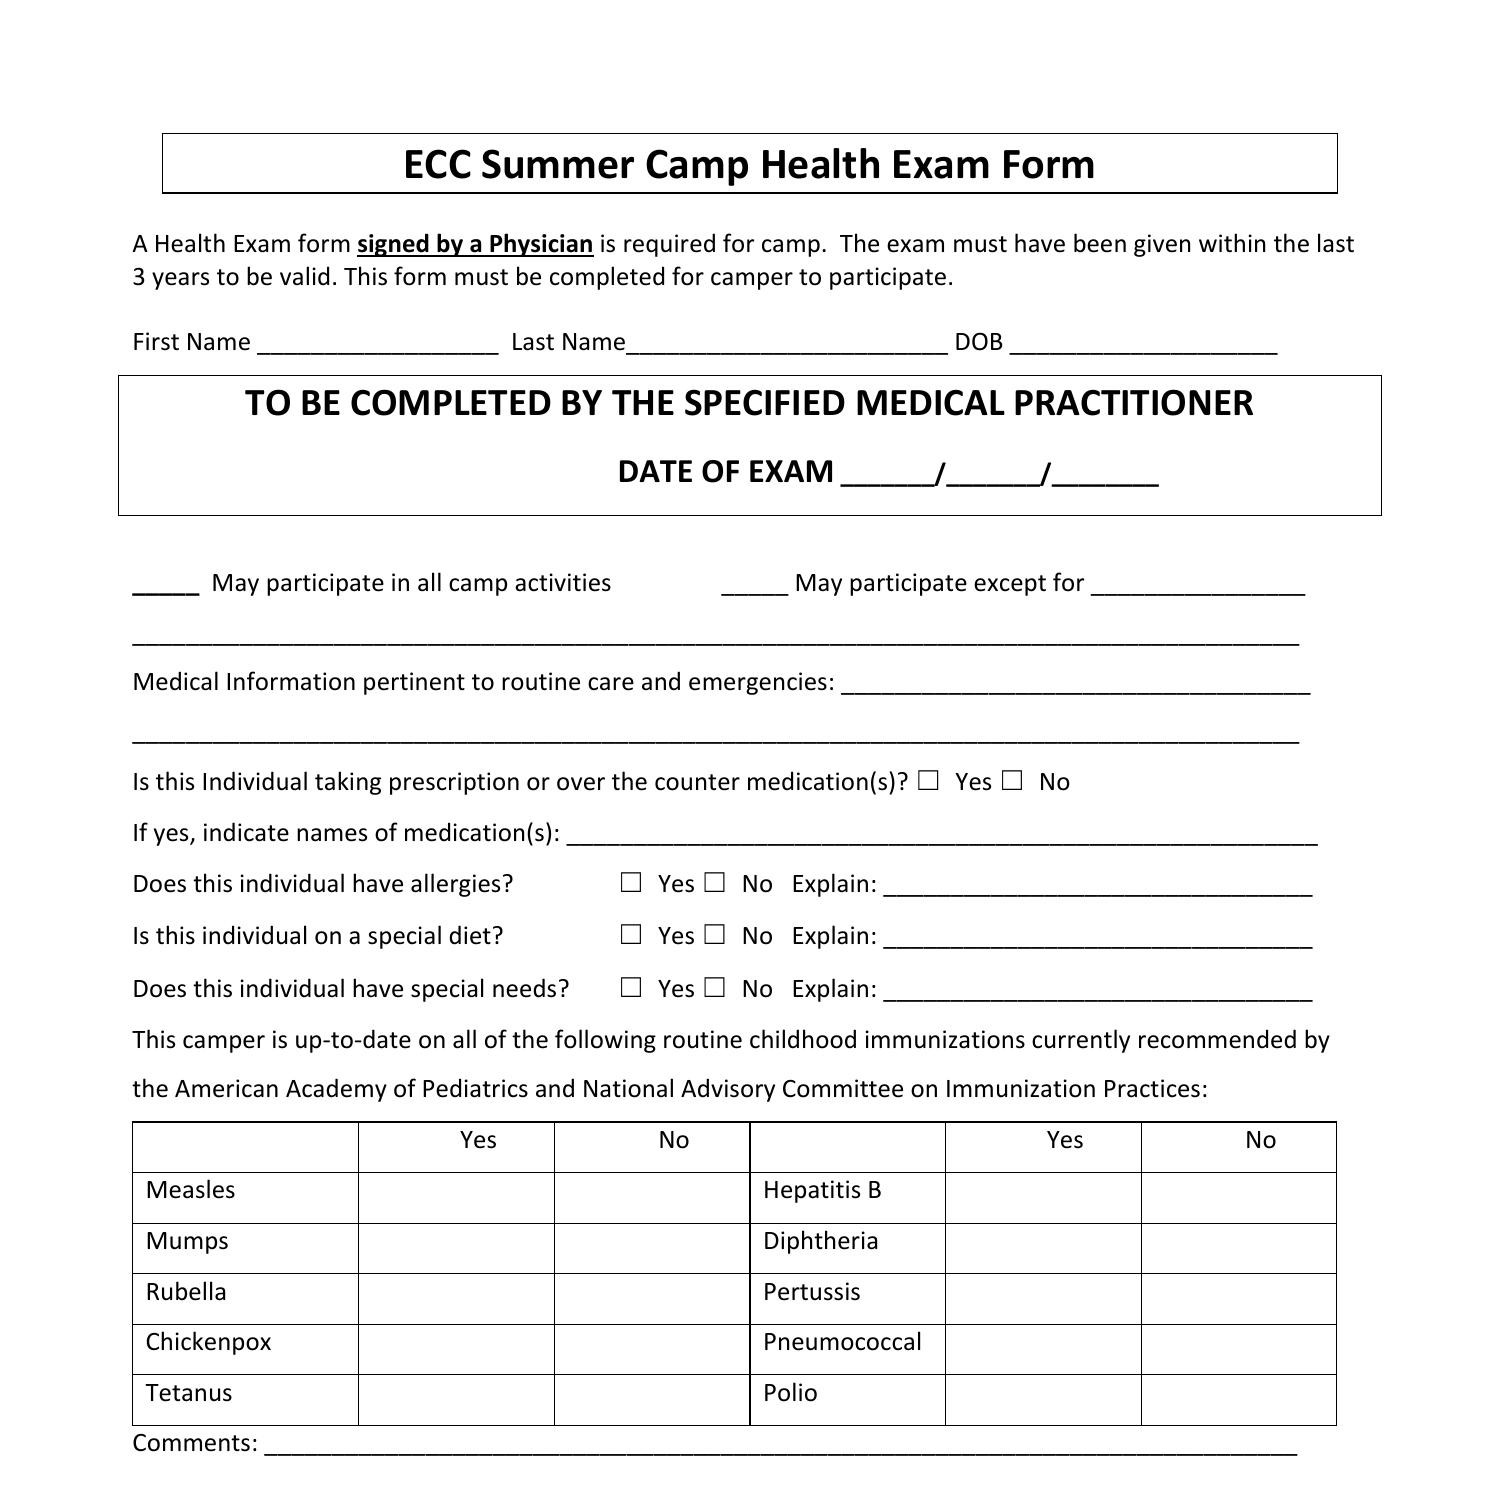 ECC Summer Camp Health Exam Form.pdf DocDroid